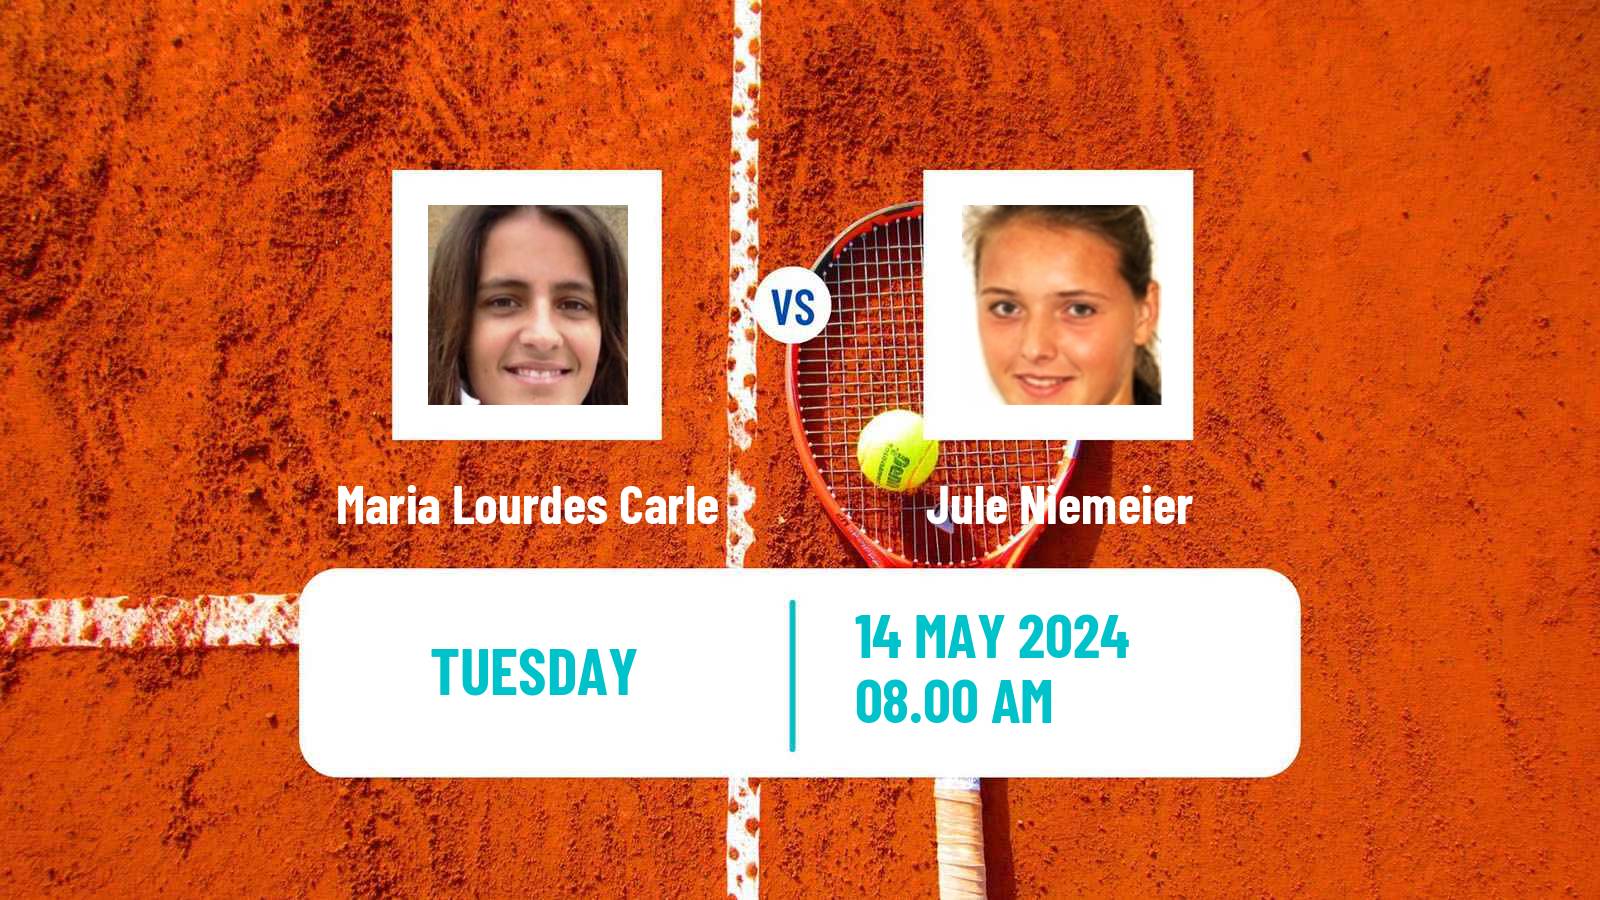 Tennis Parma Challenger Women 2024 Maria Lourdes Carle - Jule Niemeier